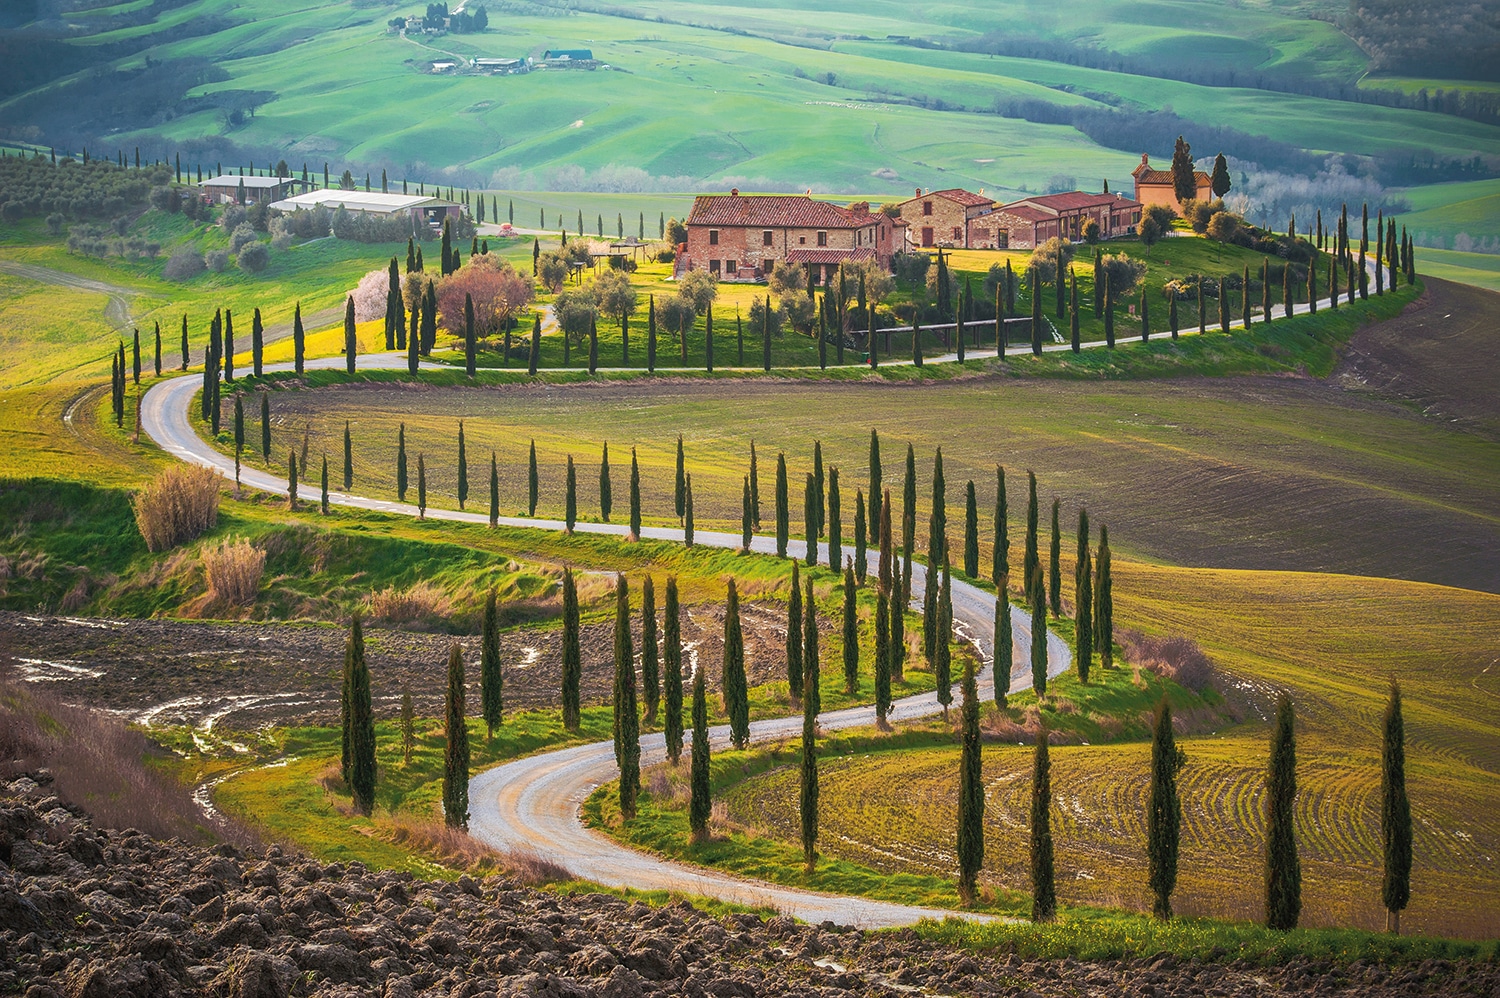 Papermoon Fototapete "Fields in Tuscany"